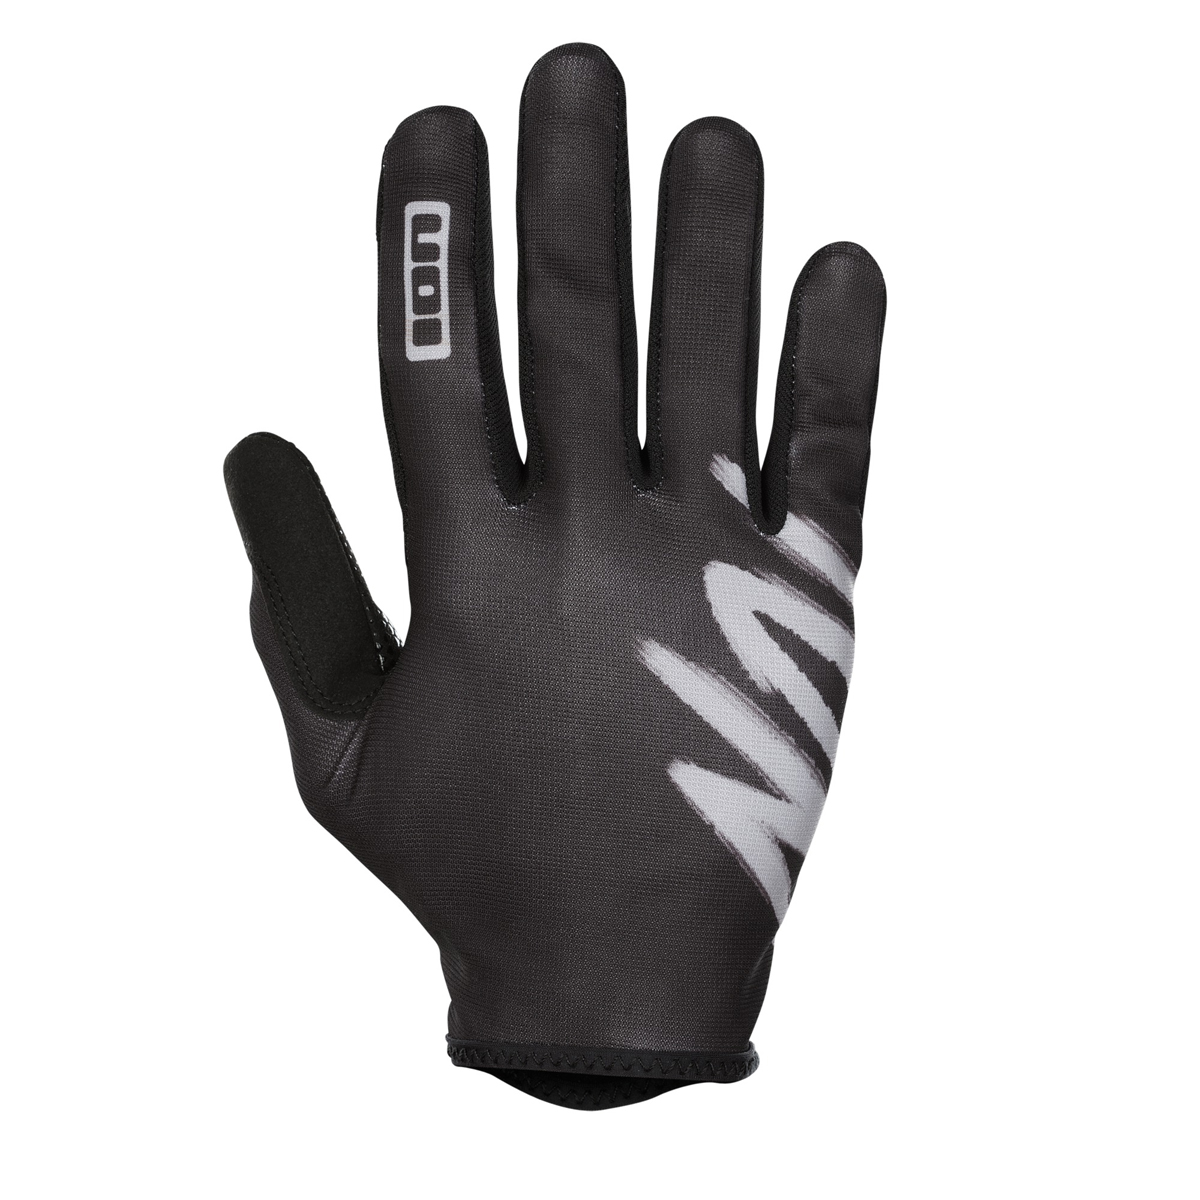 Ion Dude MX DH FR Fahrrad Handschuhe lang schwarz/weiß 2018